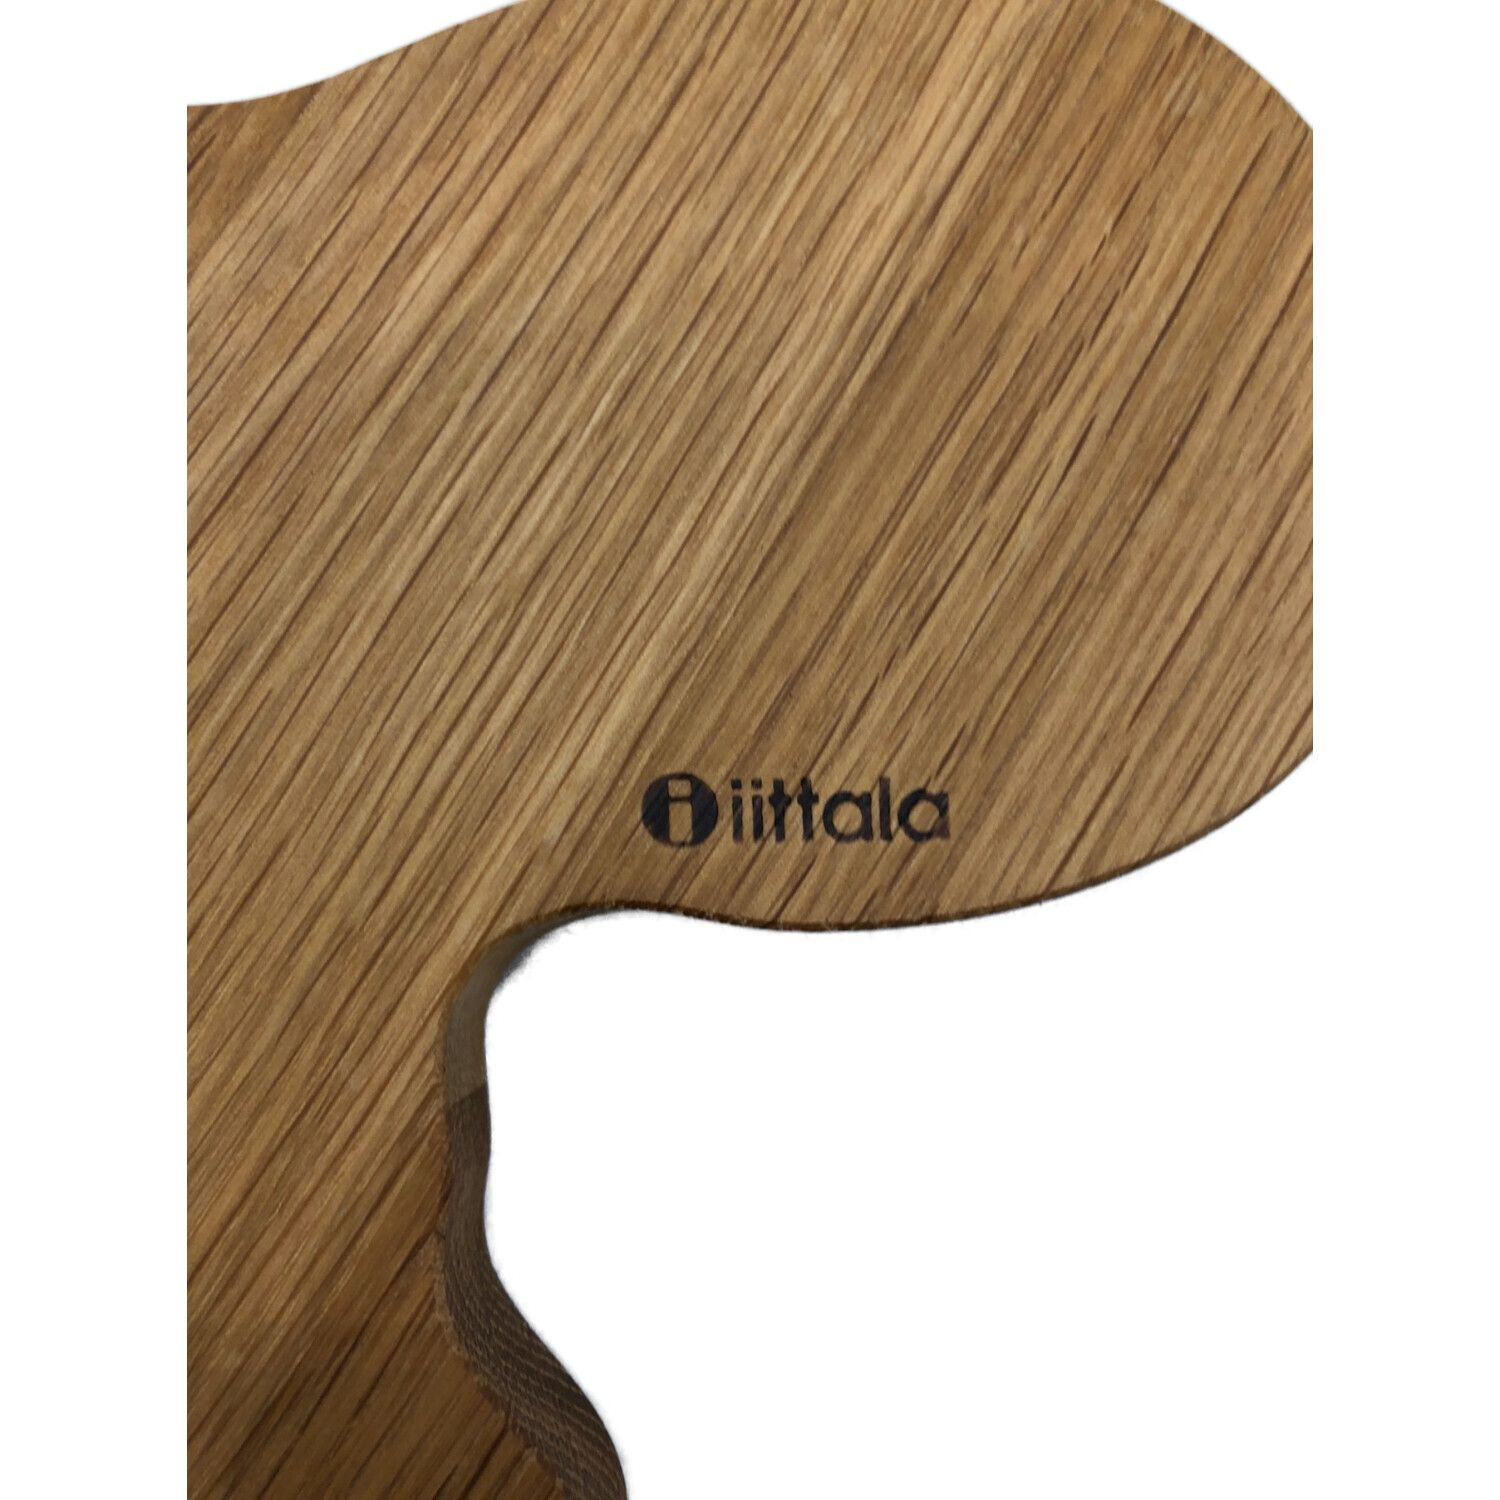 iittala (イッタラ) サービングプラターS Alvar Aalto 廃盤 木製